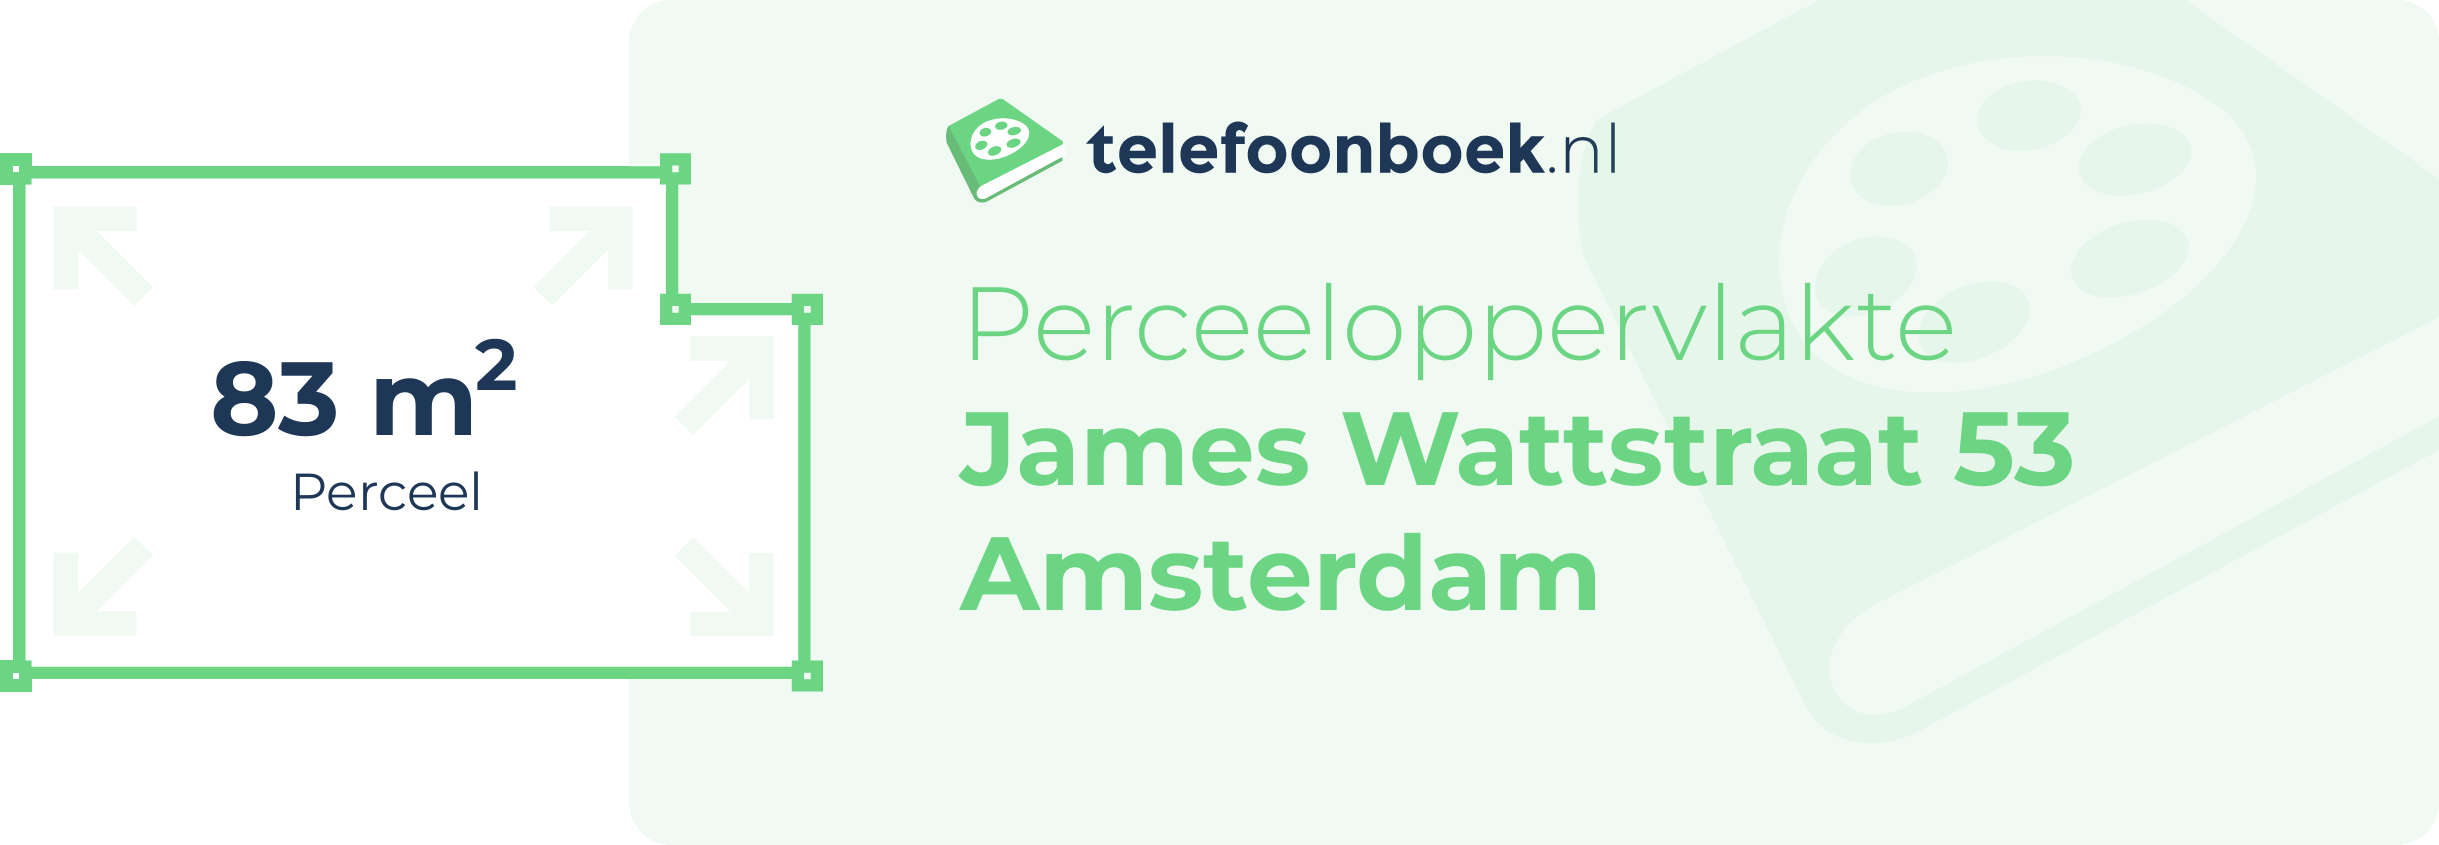 Perceeloppervlakte James Wattstraat 53 Amsterdam